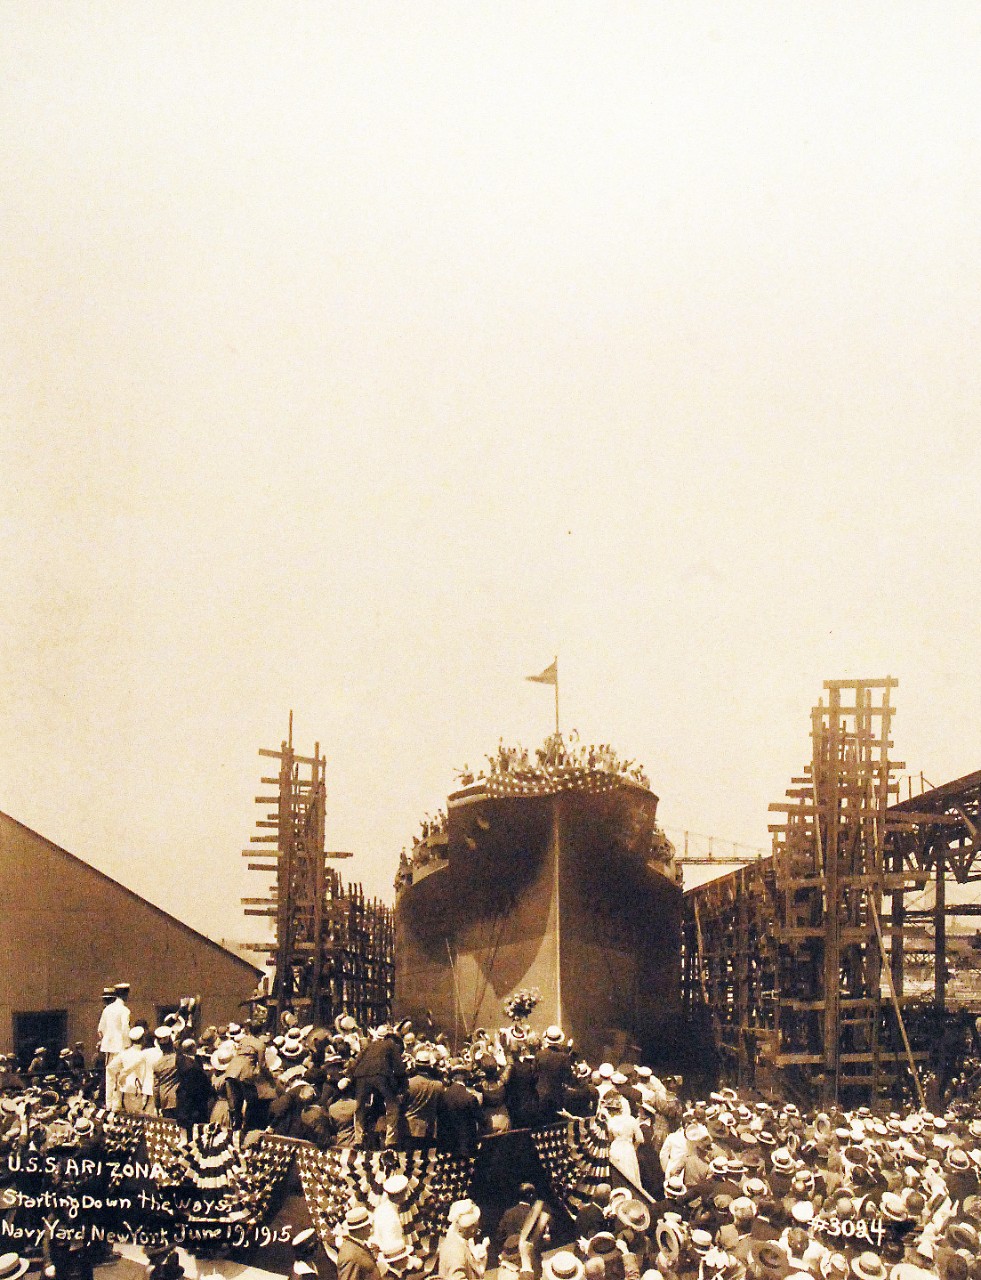 <p>19-LC-19A-28: USS Arizona (BB 39) starting down the ways during launching at New York Navy Yard, New York City, June 19, 1915.&nbsp;</p>
